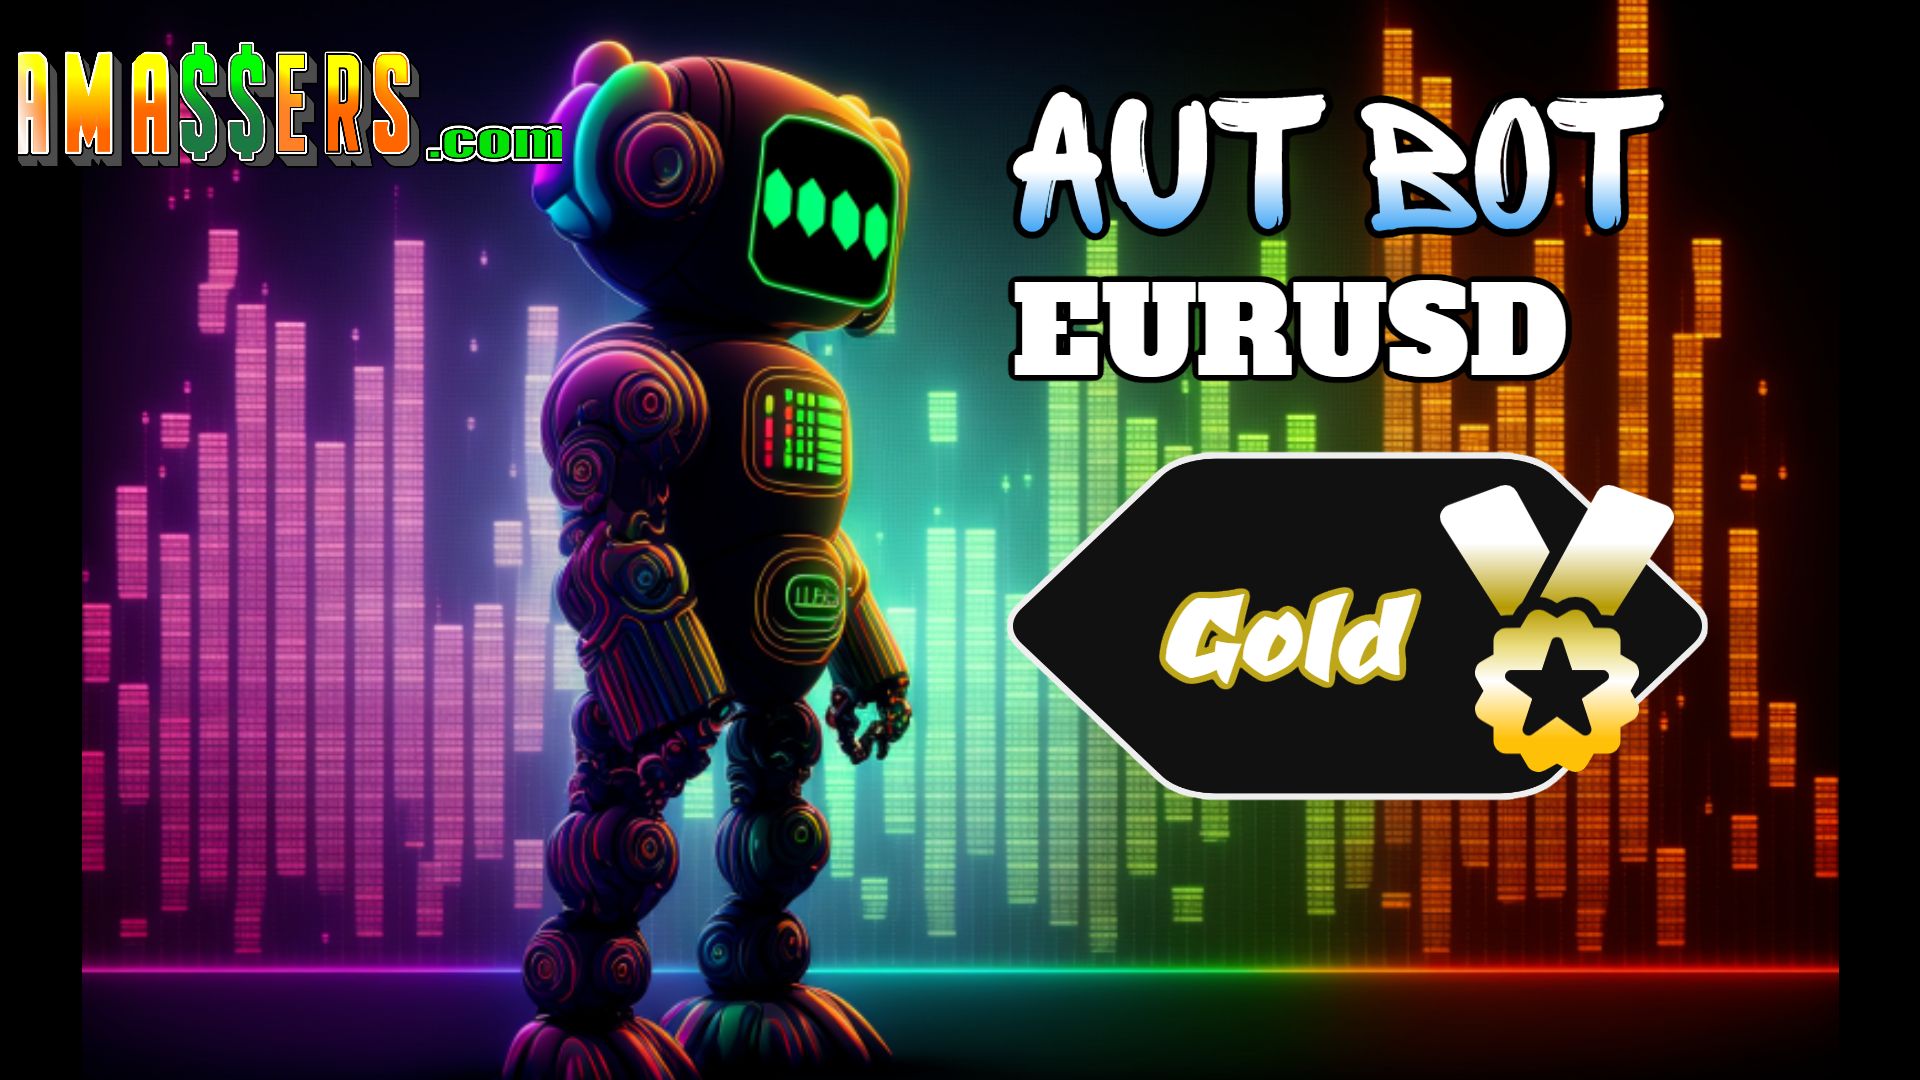 AUT BOT EURUSD GOLD EA 90 days access